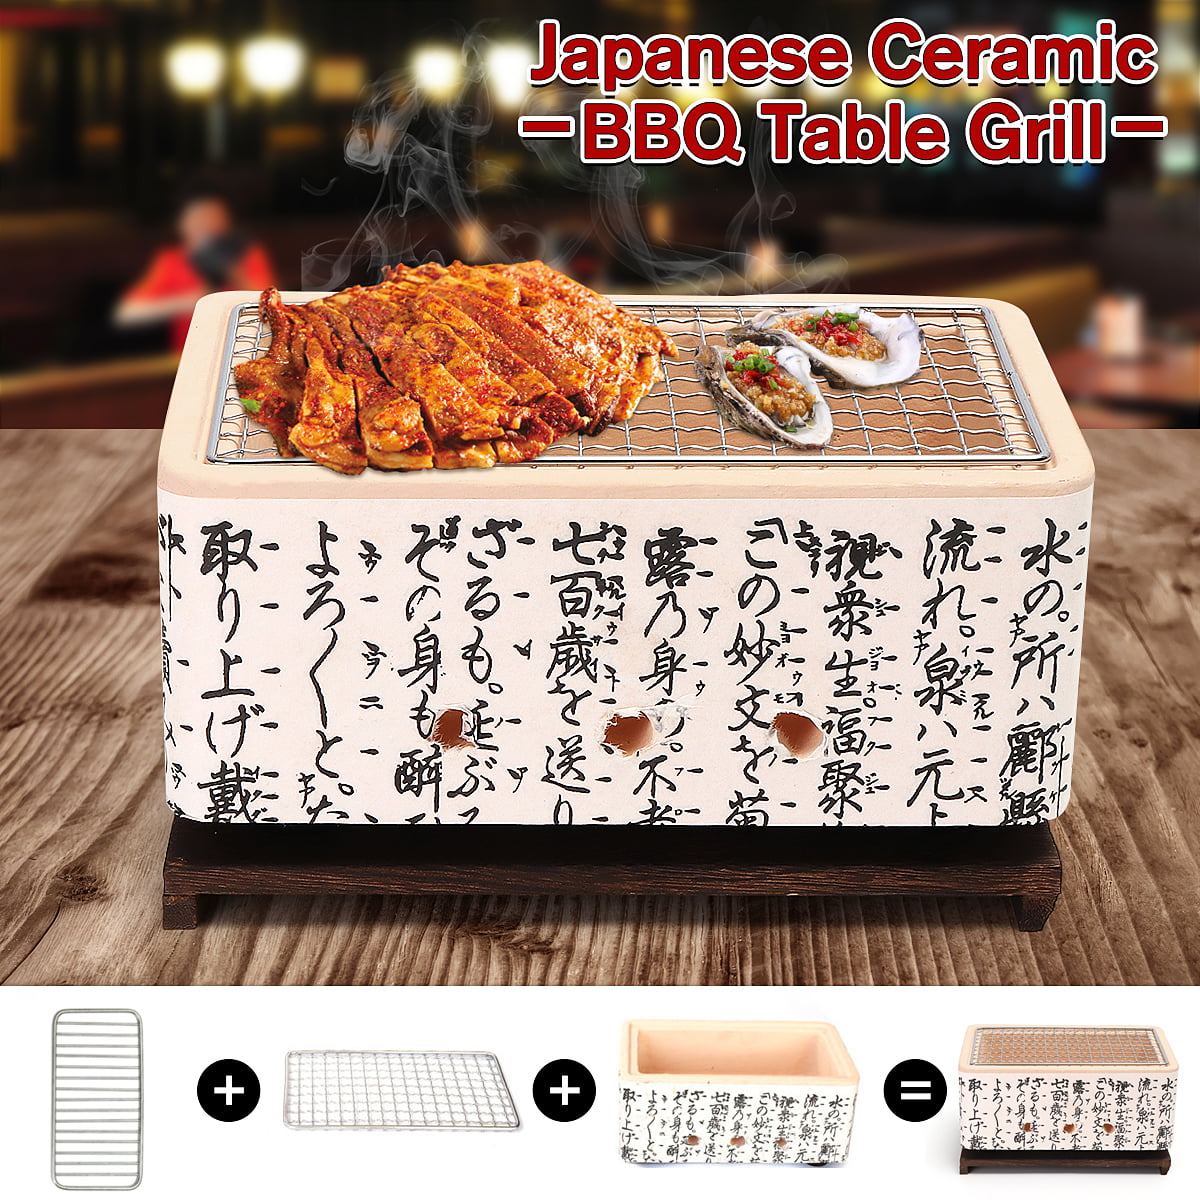 Japanese Korean Ceramic Hibachi BBQ Table Grill Yakitori Barbecue 